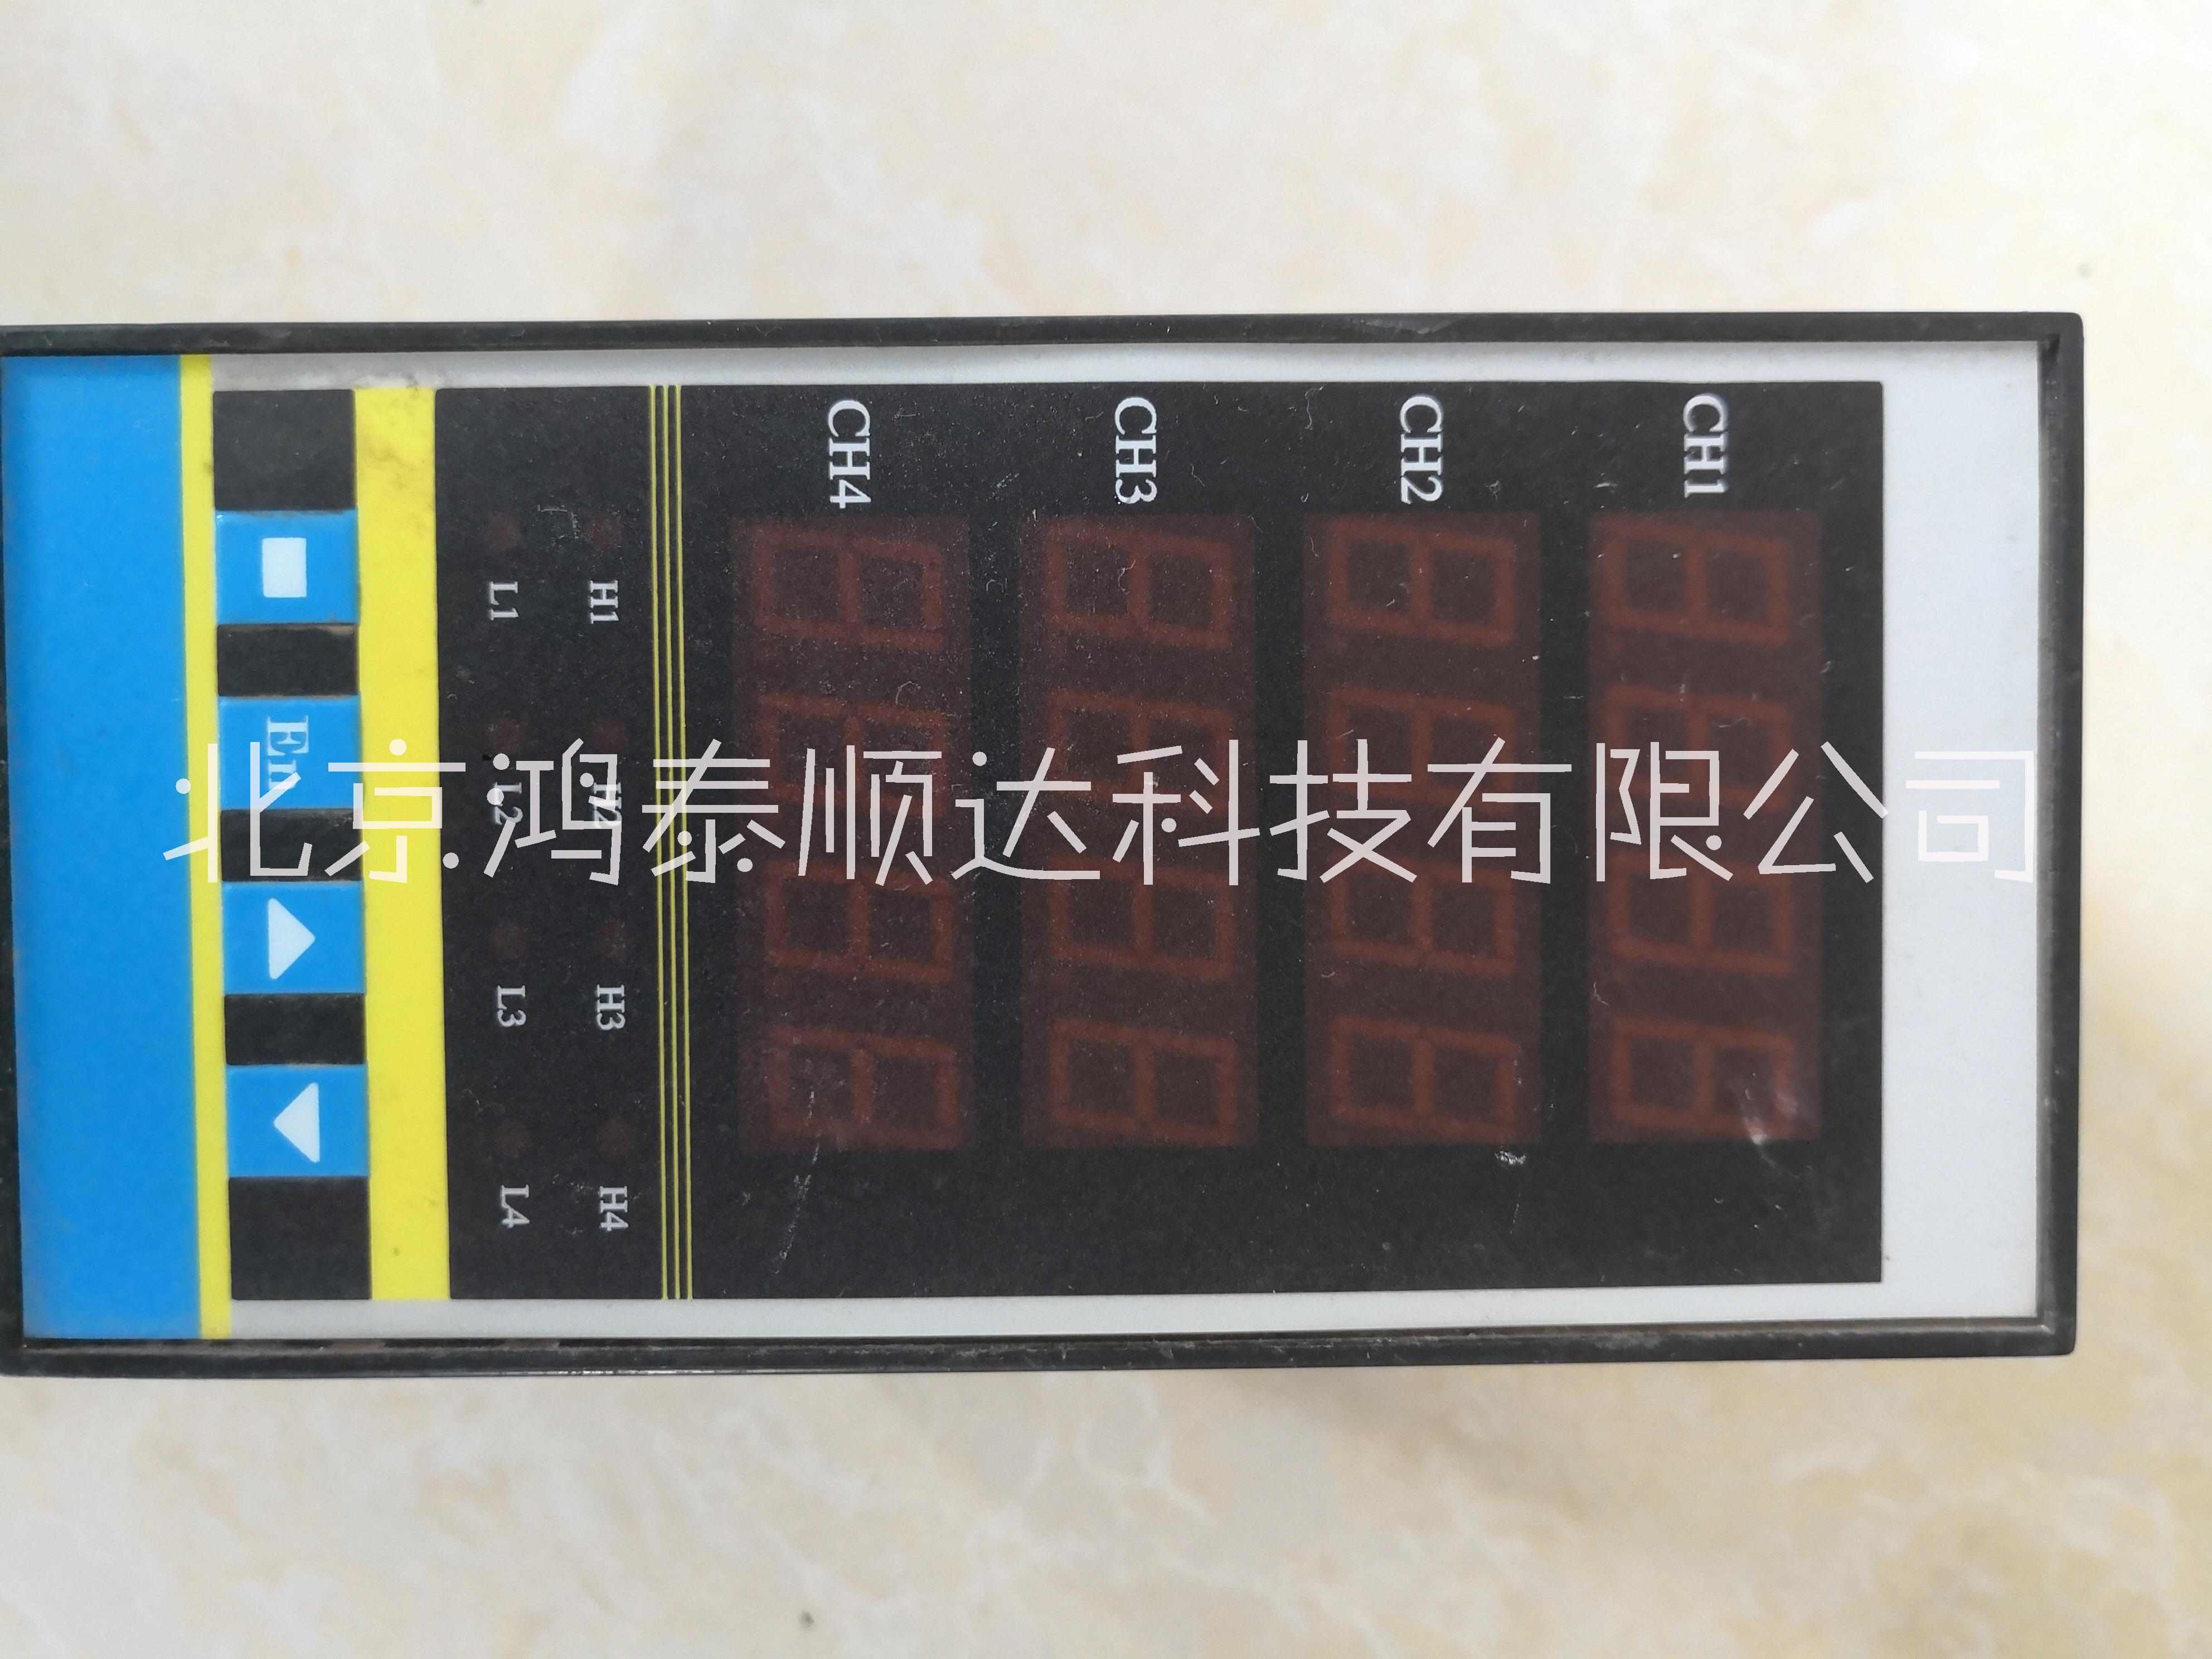 HY-02胀差保护系统优选北京鸿泰顺达科技有限公司；HY-02胀差保护系统市场价格|经销价格|询价电话